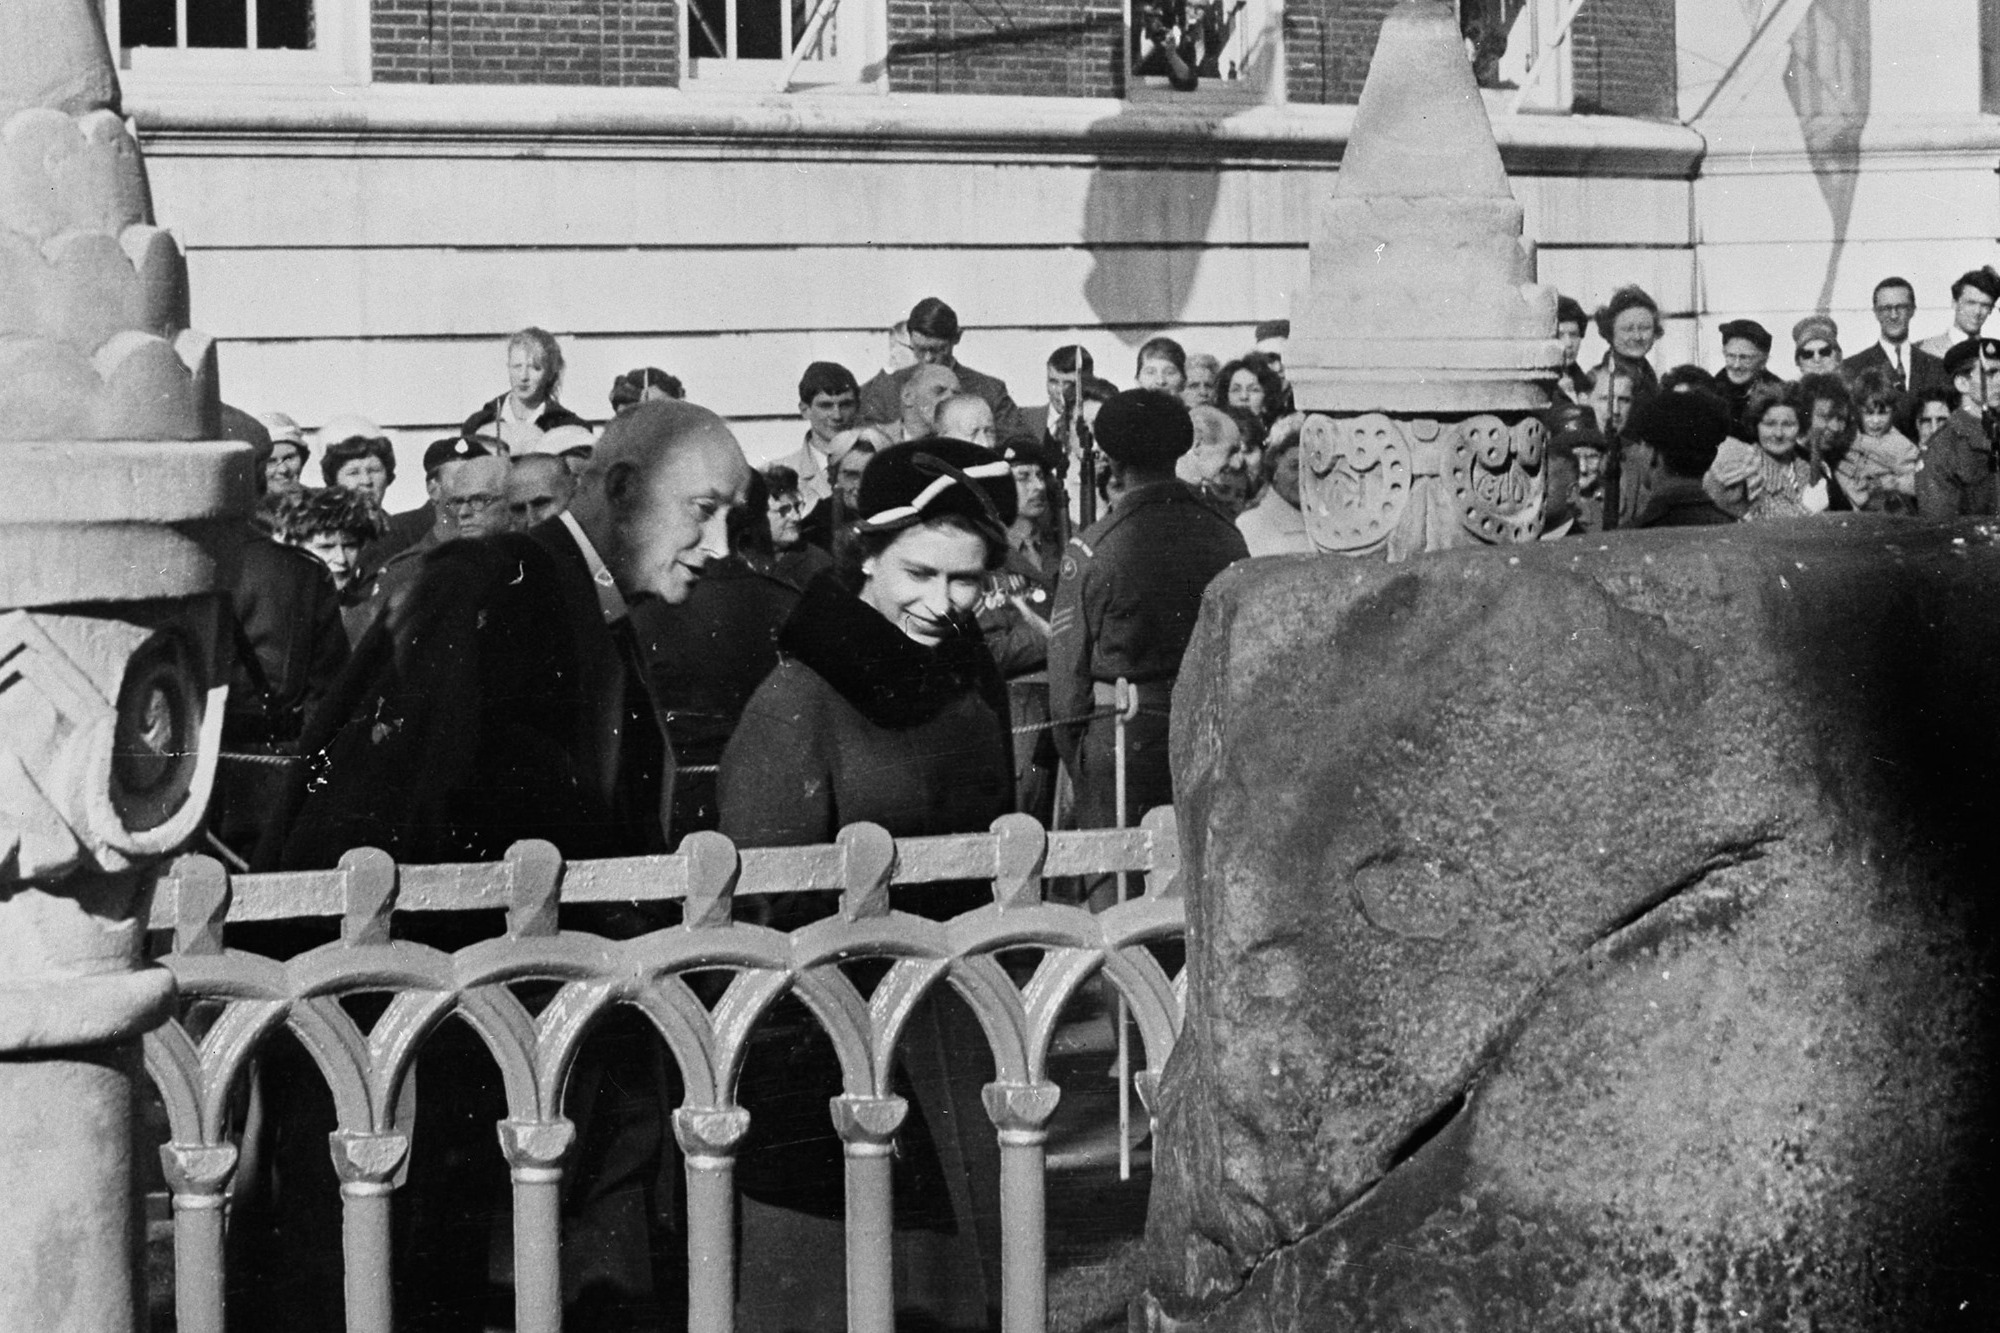 Queen Elizabeth visits the Coronation Stone